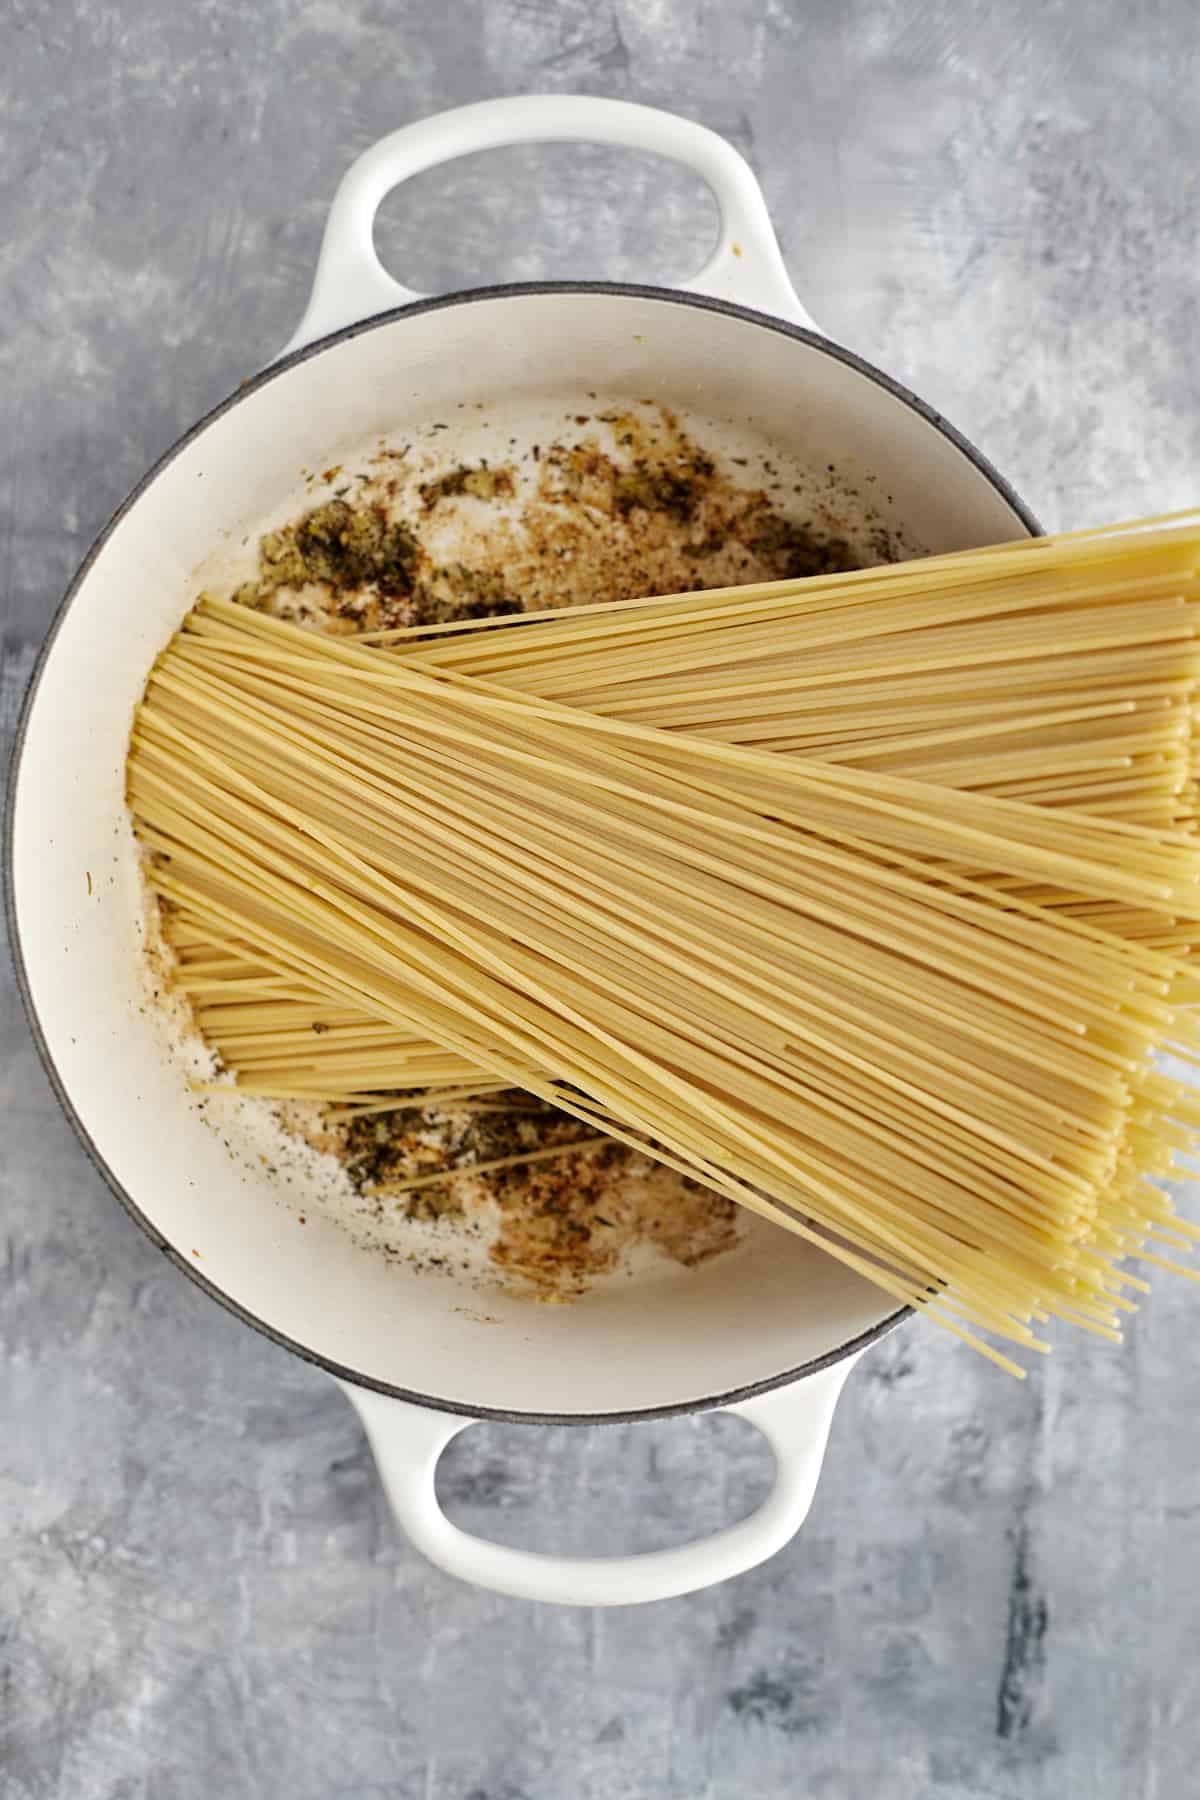 spaghetti noodles in a pot to make spaghetti carbonara